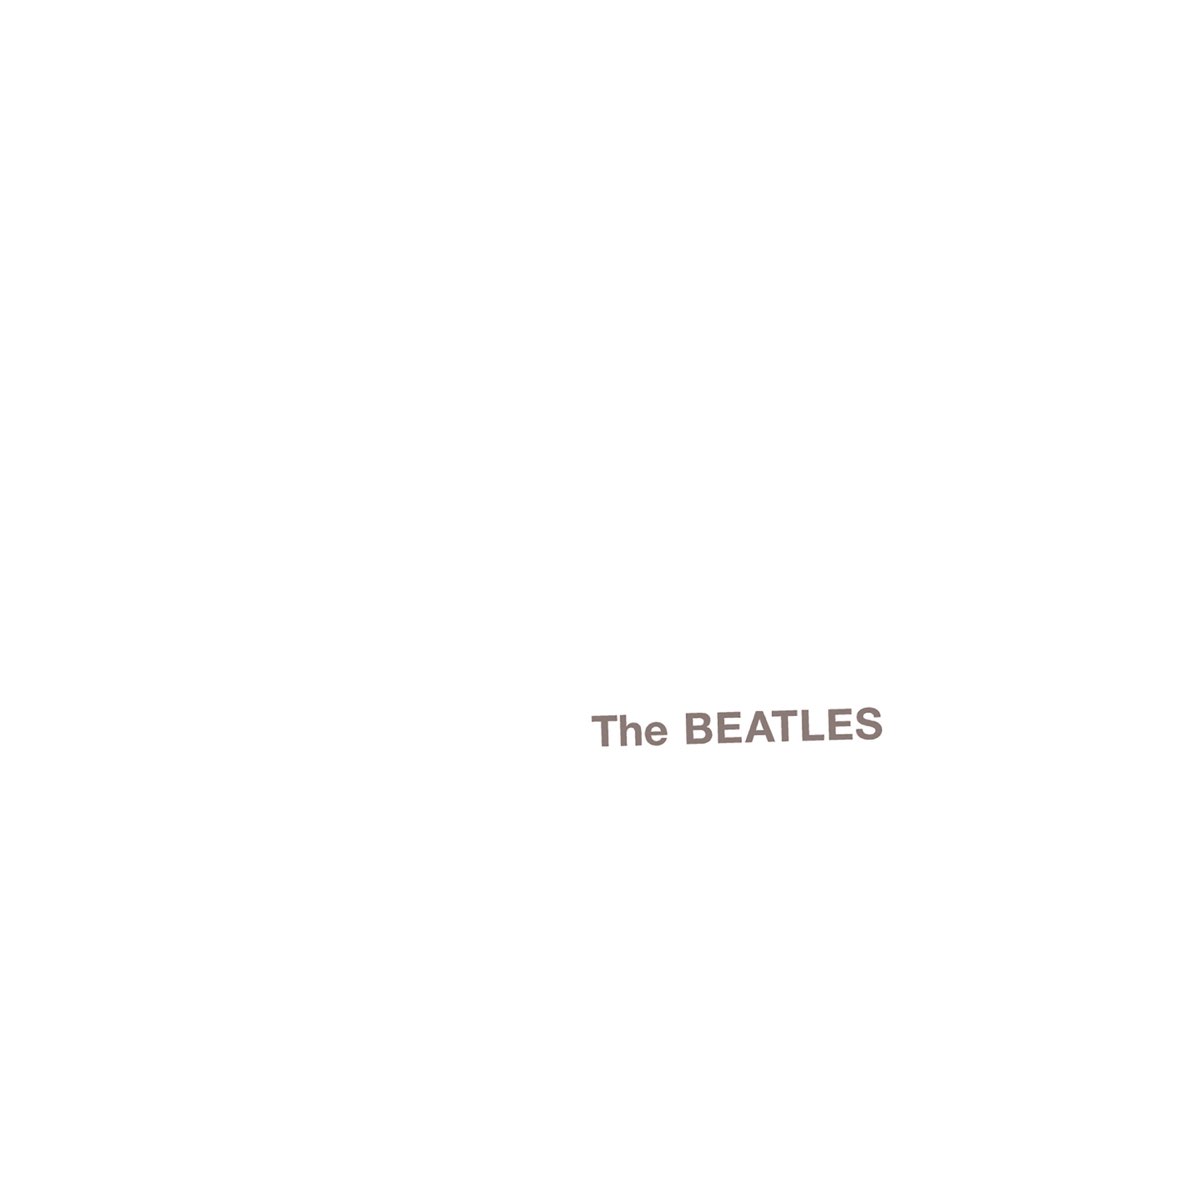 The Beatles The Beatles (The White Album) cover artwork